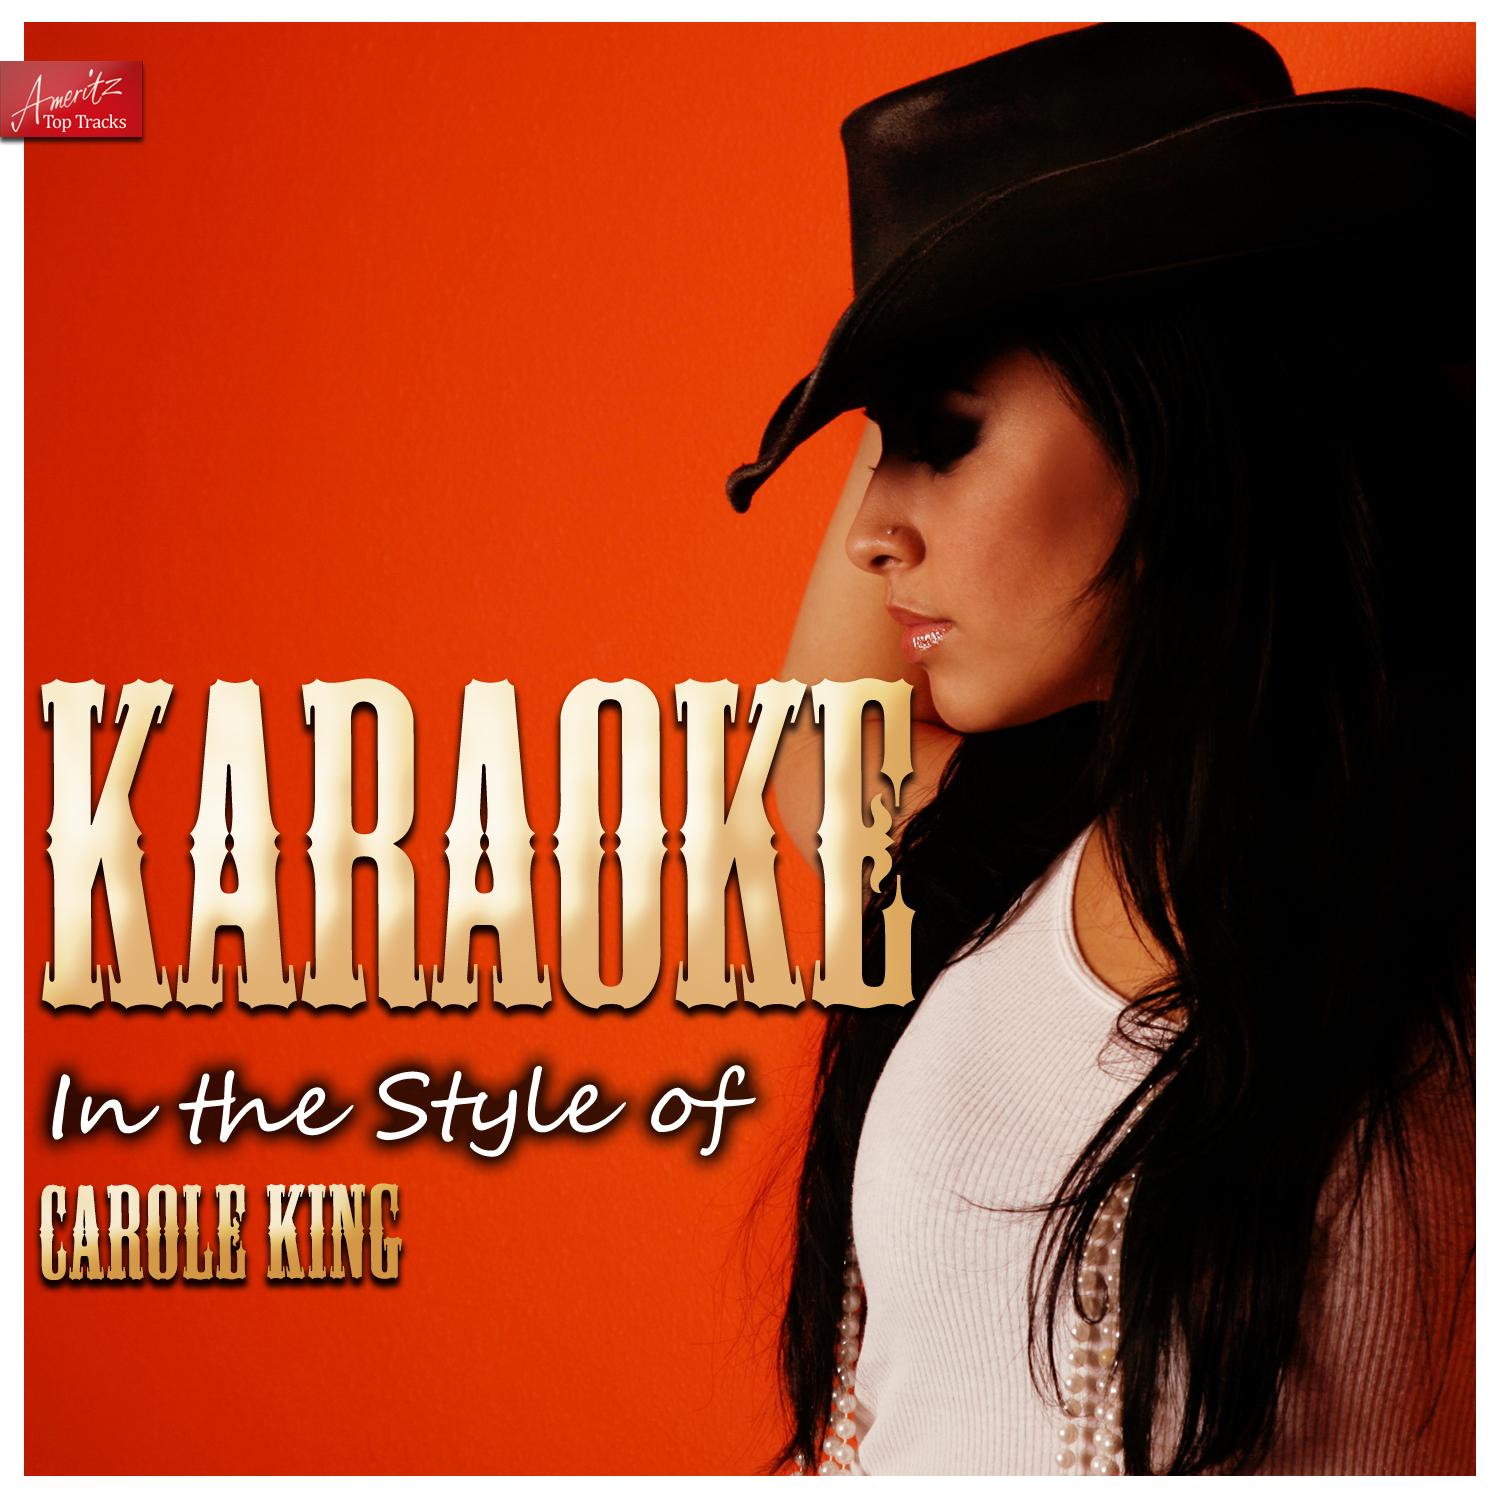 Nightingale (In the Style of Carole King) [Karaoke Version]